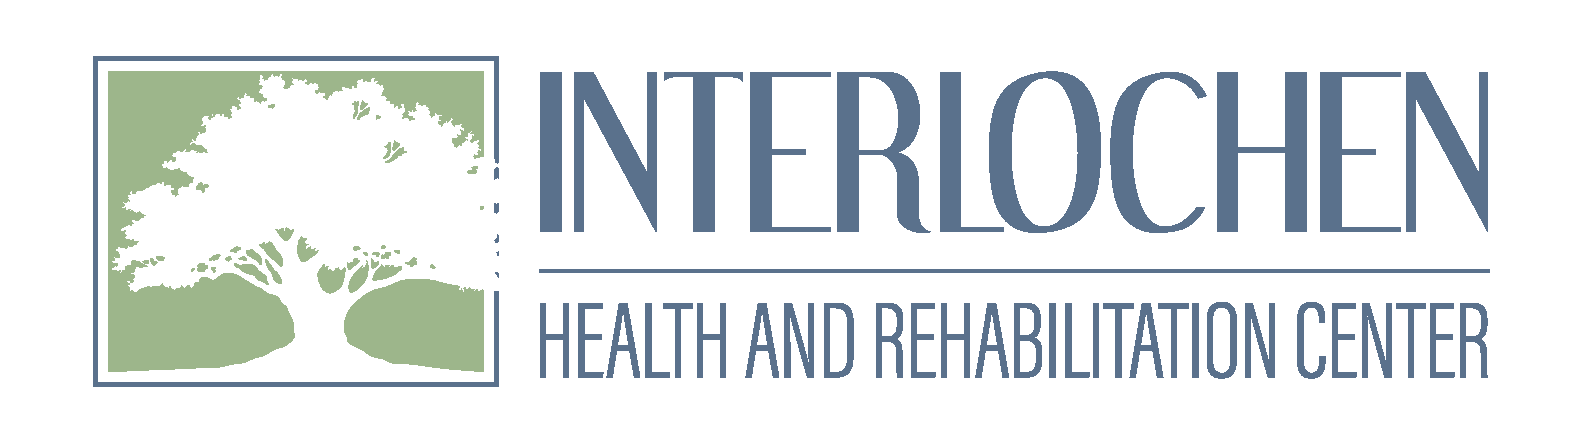 Interlochen Health and Rehabilitation Center